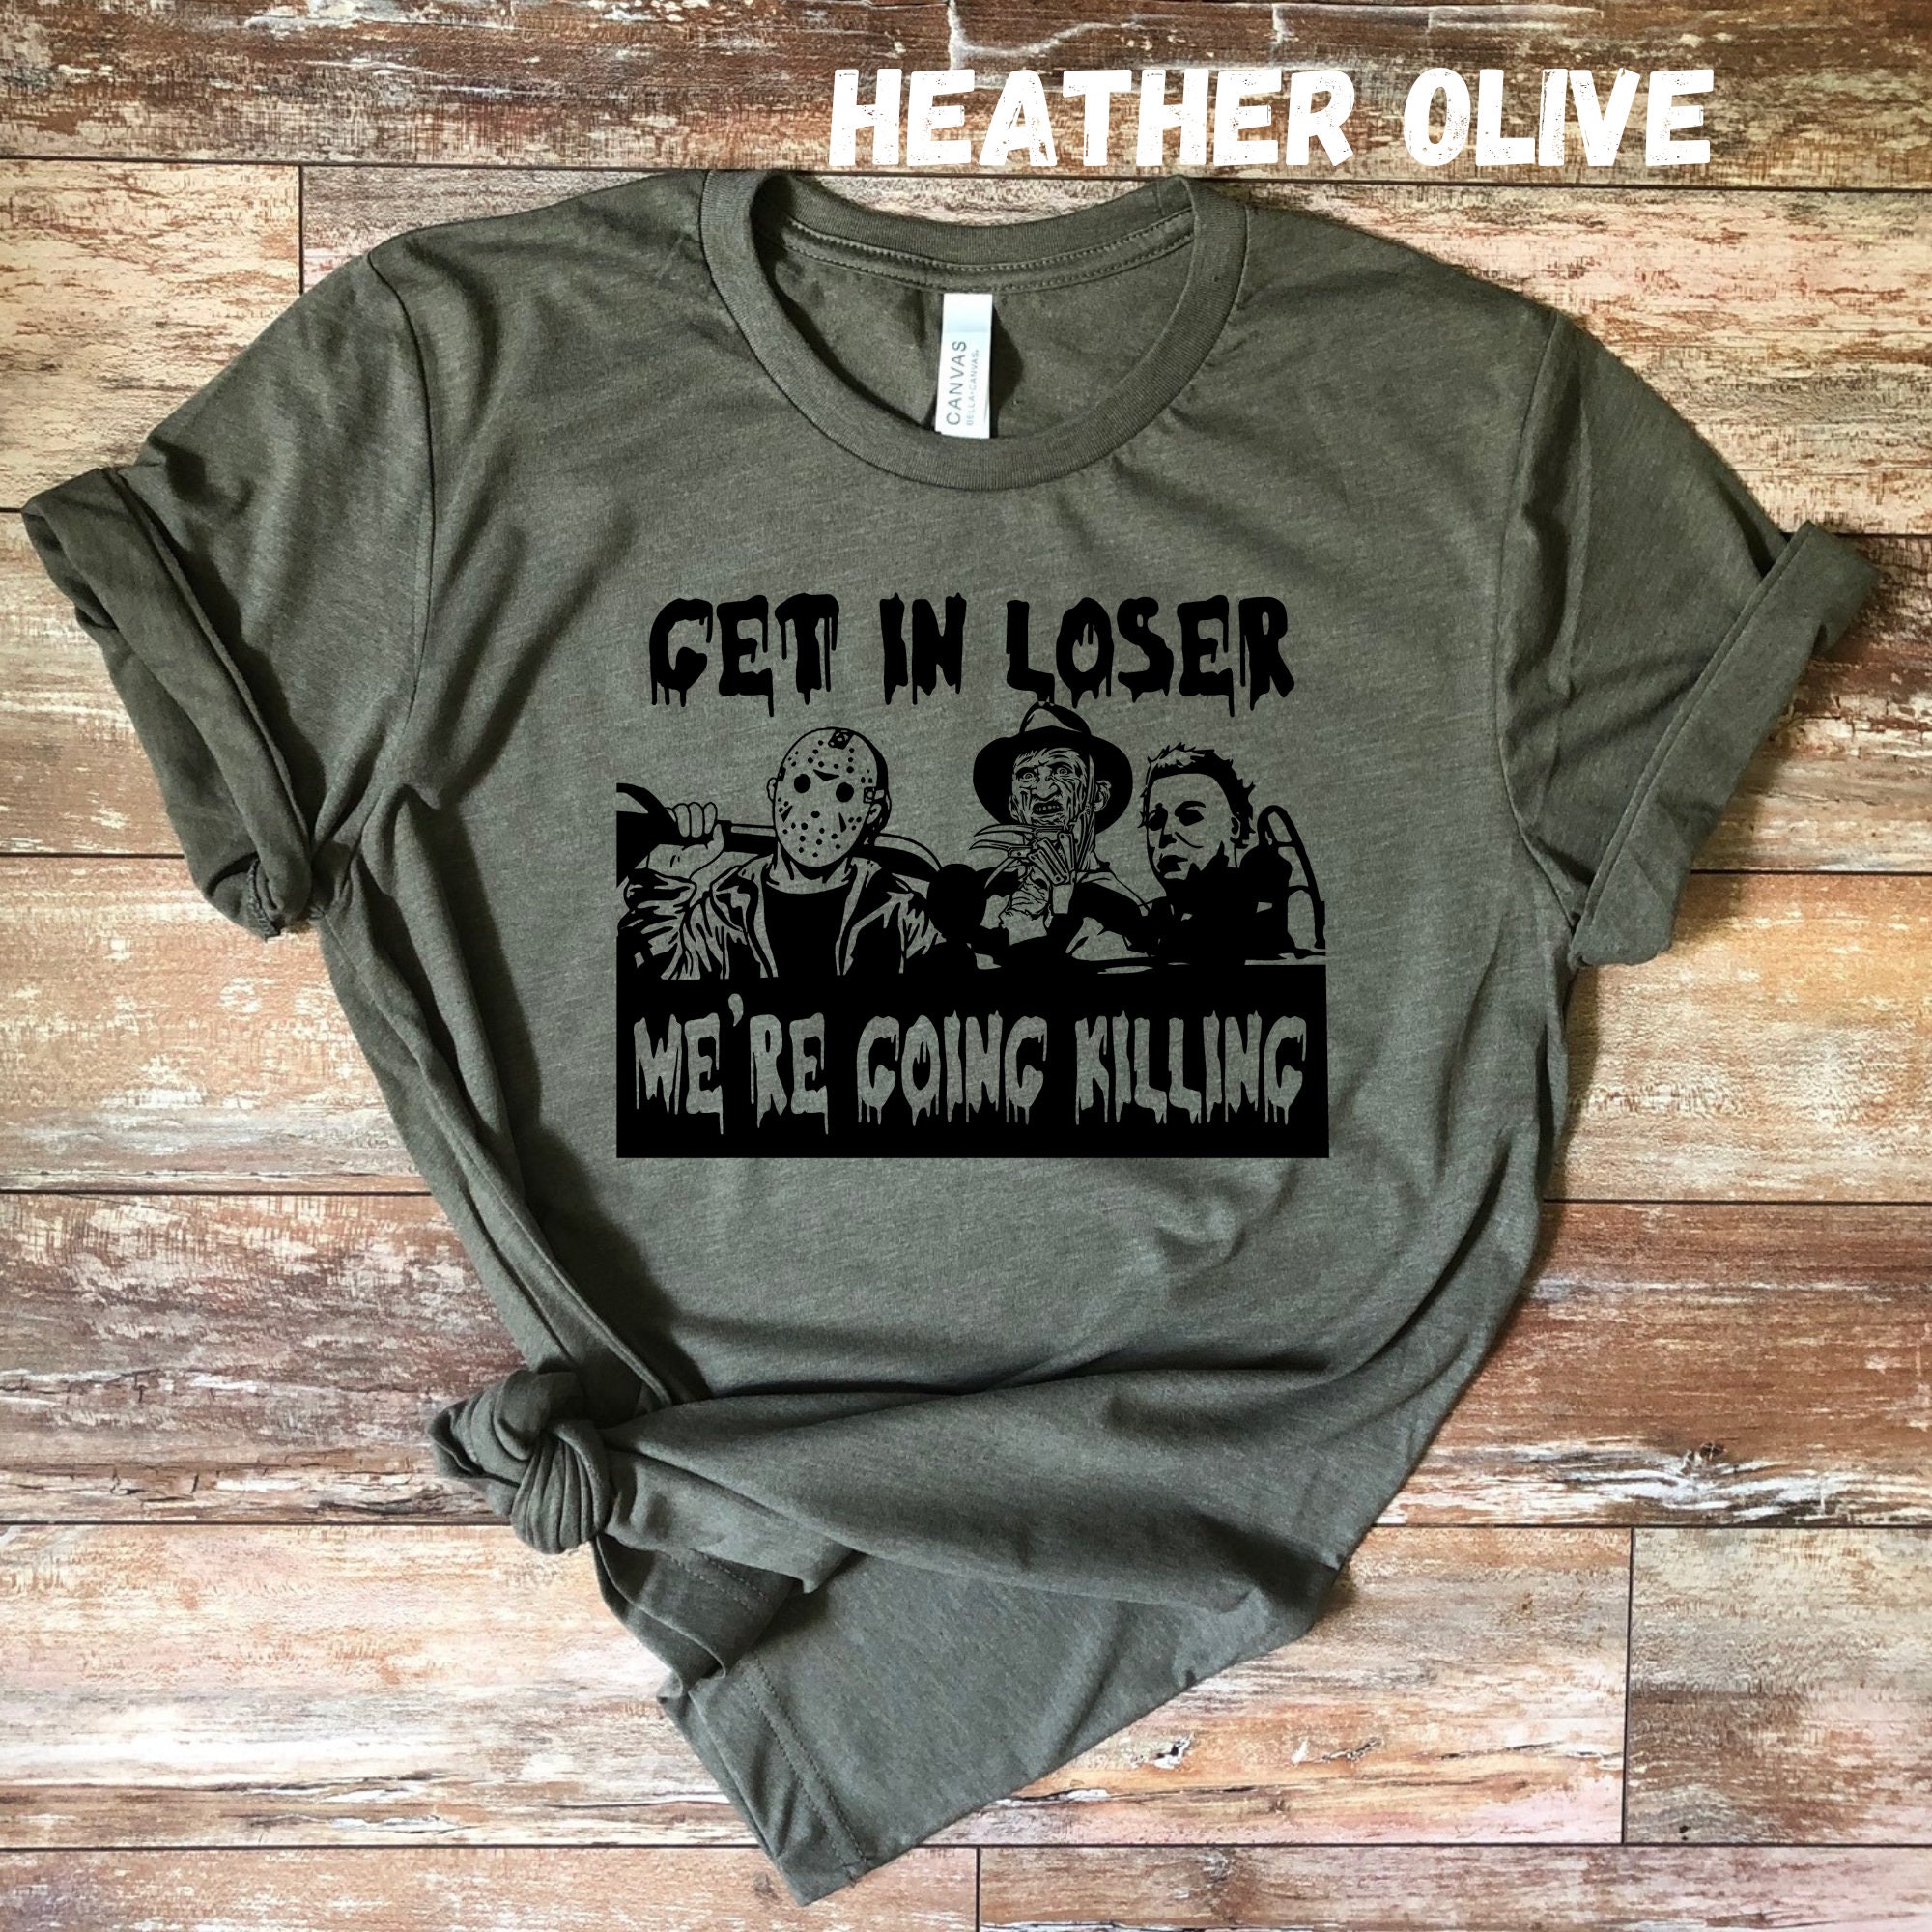 Discover Horror Movie Halloween Goth Shirt,Get In Loser,Freddy Krueger Michael Myers Jason Shirt,Horror Friends,Spooky Scary Creepy Dark Humor Tshirt